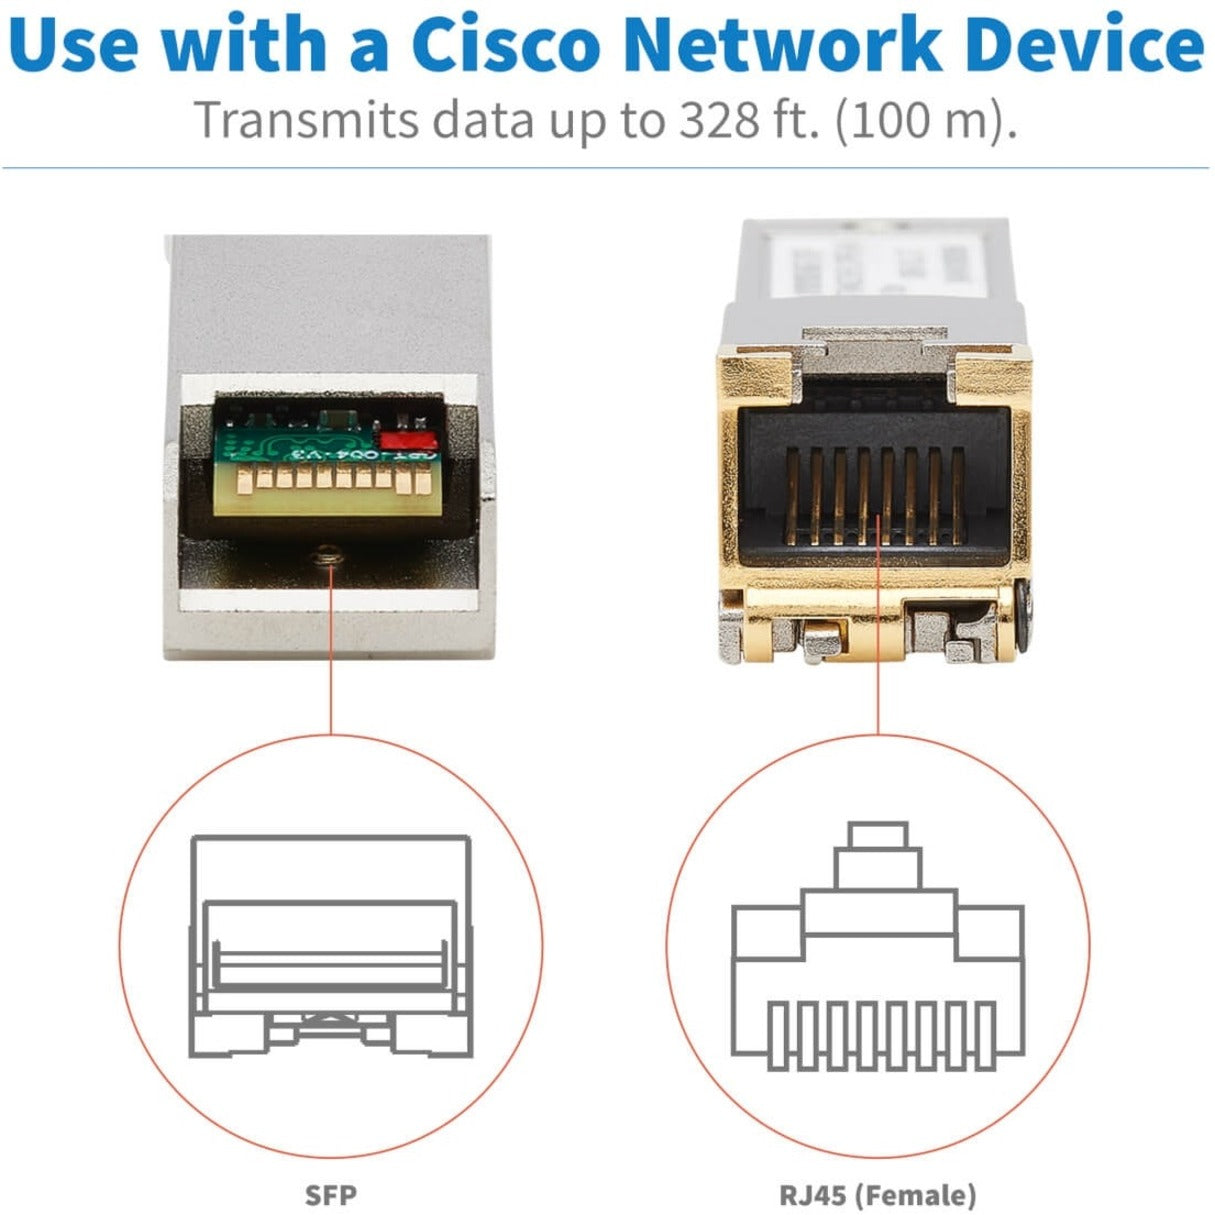 Tripp Lite N286-01GLC-TE Cisco SFP (mini-GBIC) Module, 1000Base-TX, Gigabit Ethernet, Twisted Pair, Hot-swappable